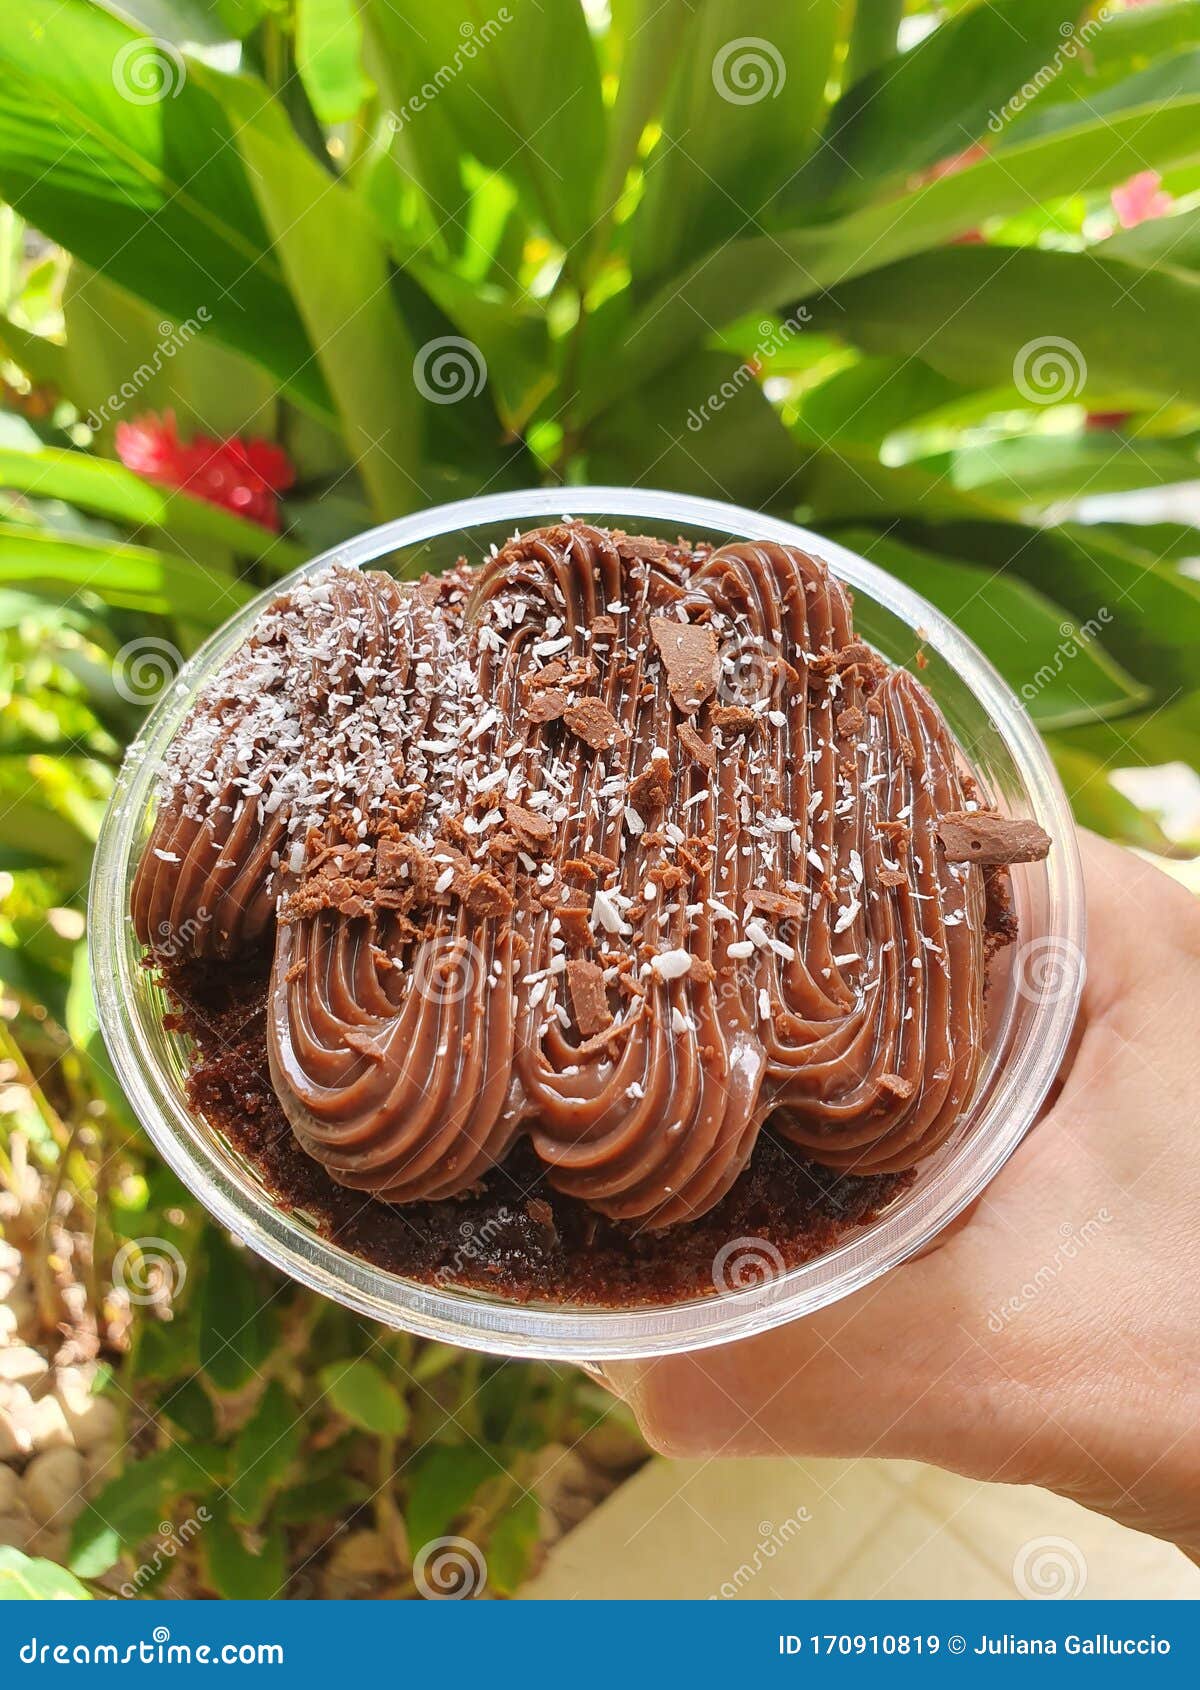 cake chocolate coco pote